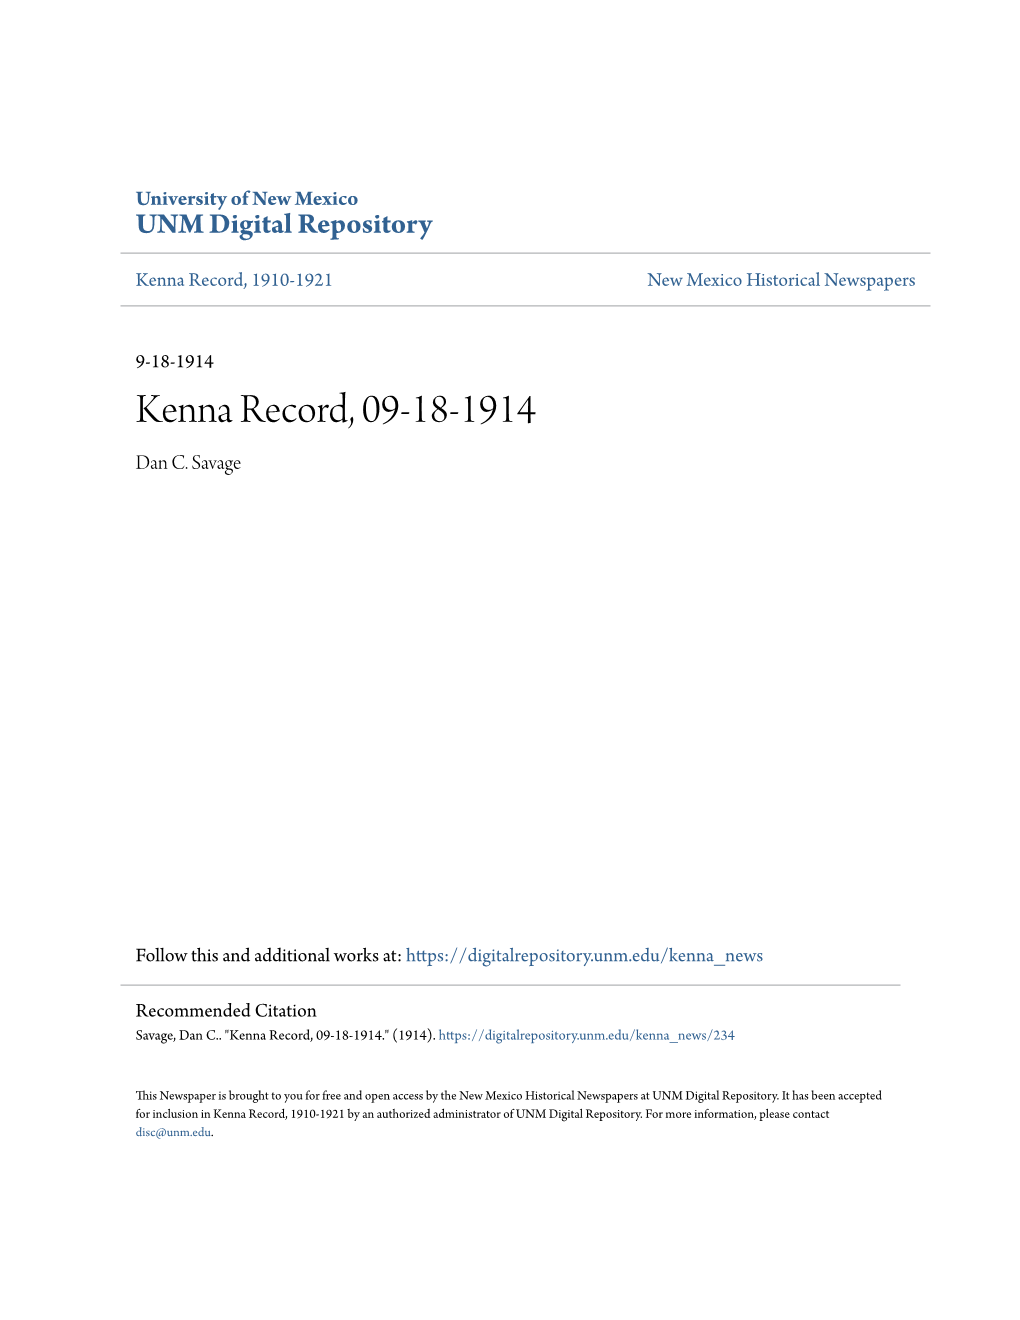 Kenna Record, 09-18-1914 Dan C